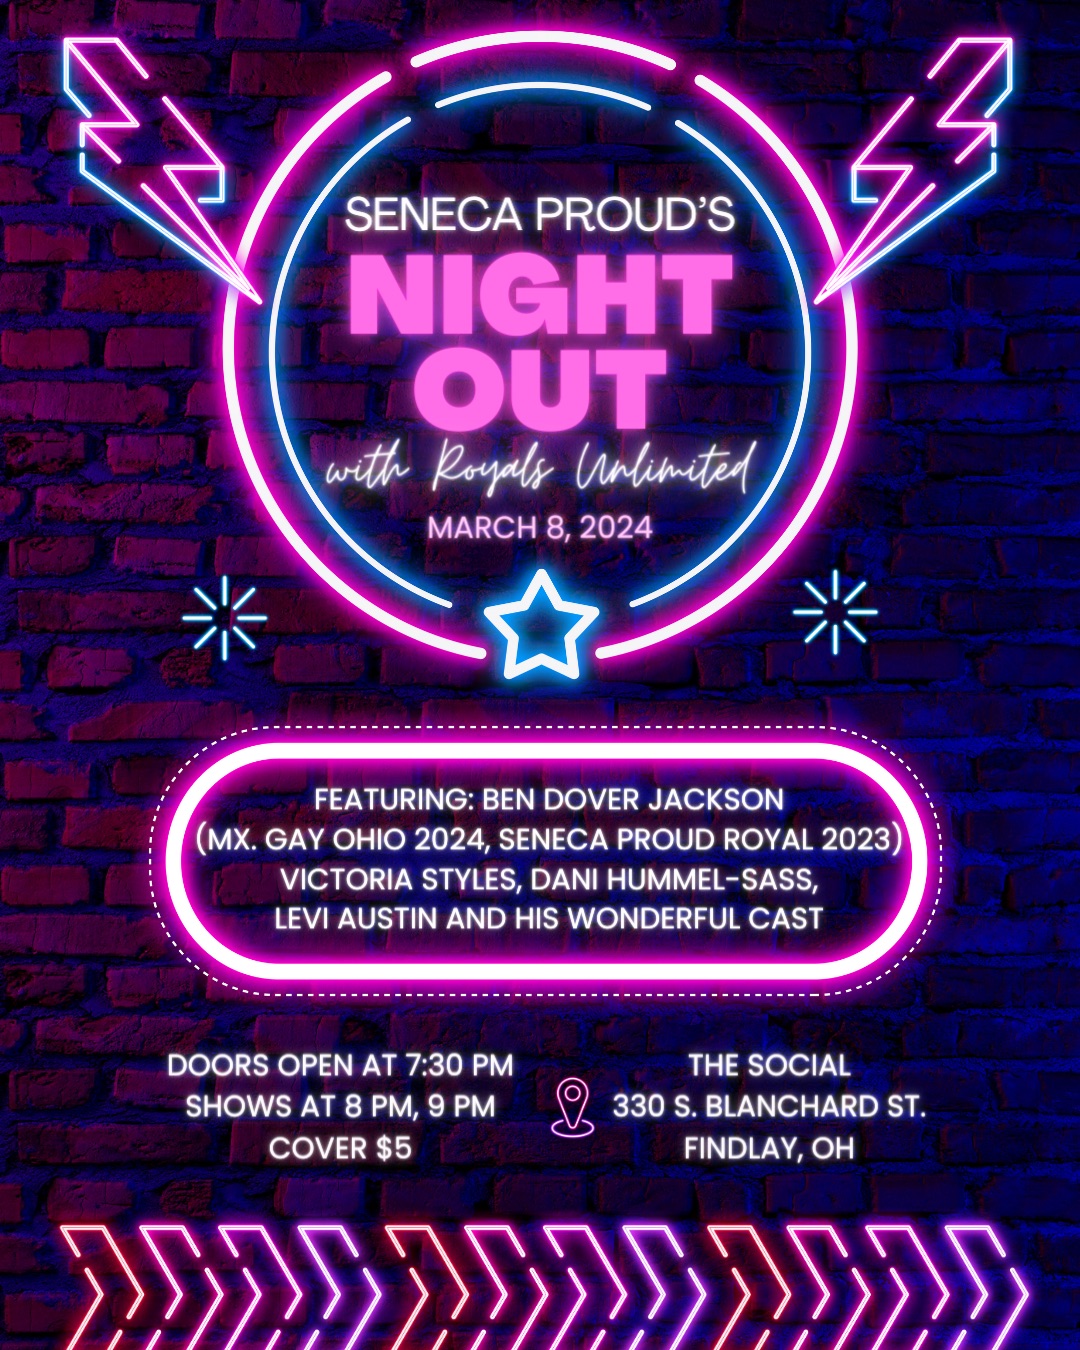 Seneca Proud's Night Out